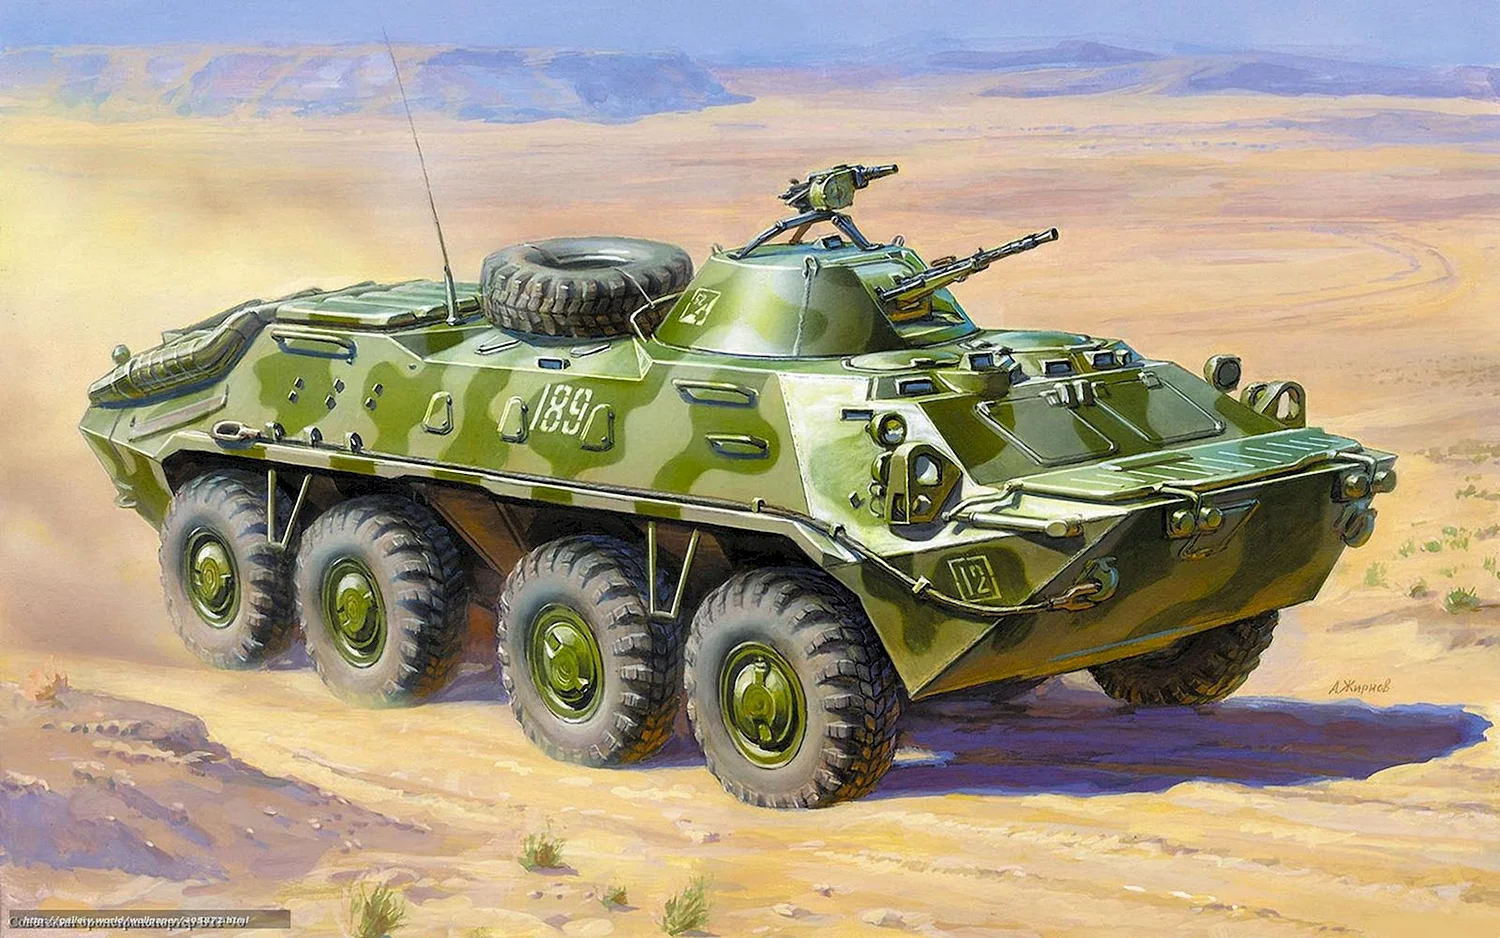 Советский бронетранспортер БТР-70